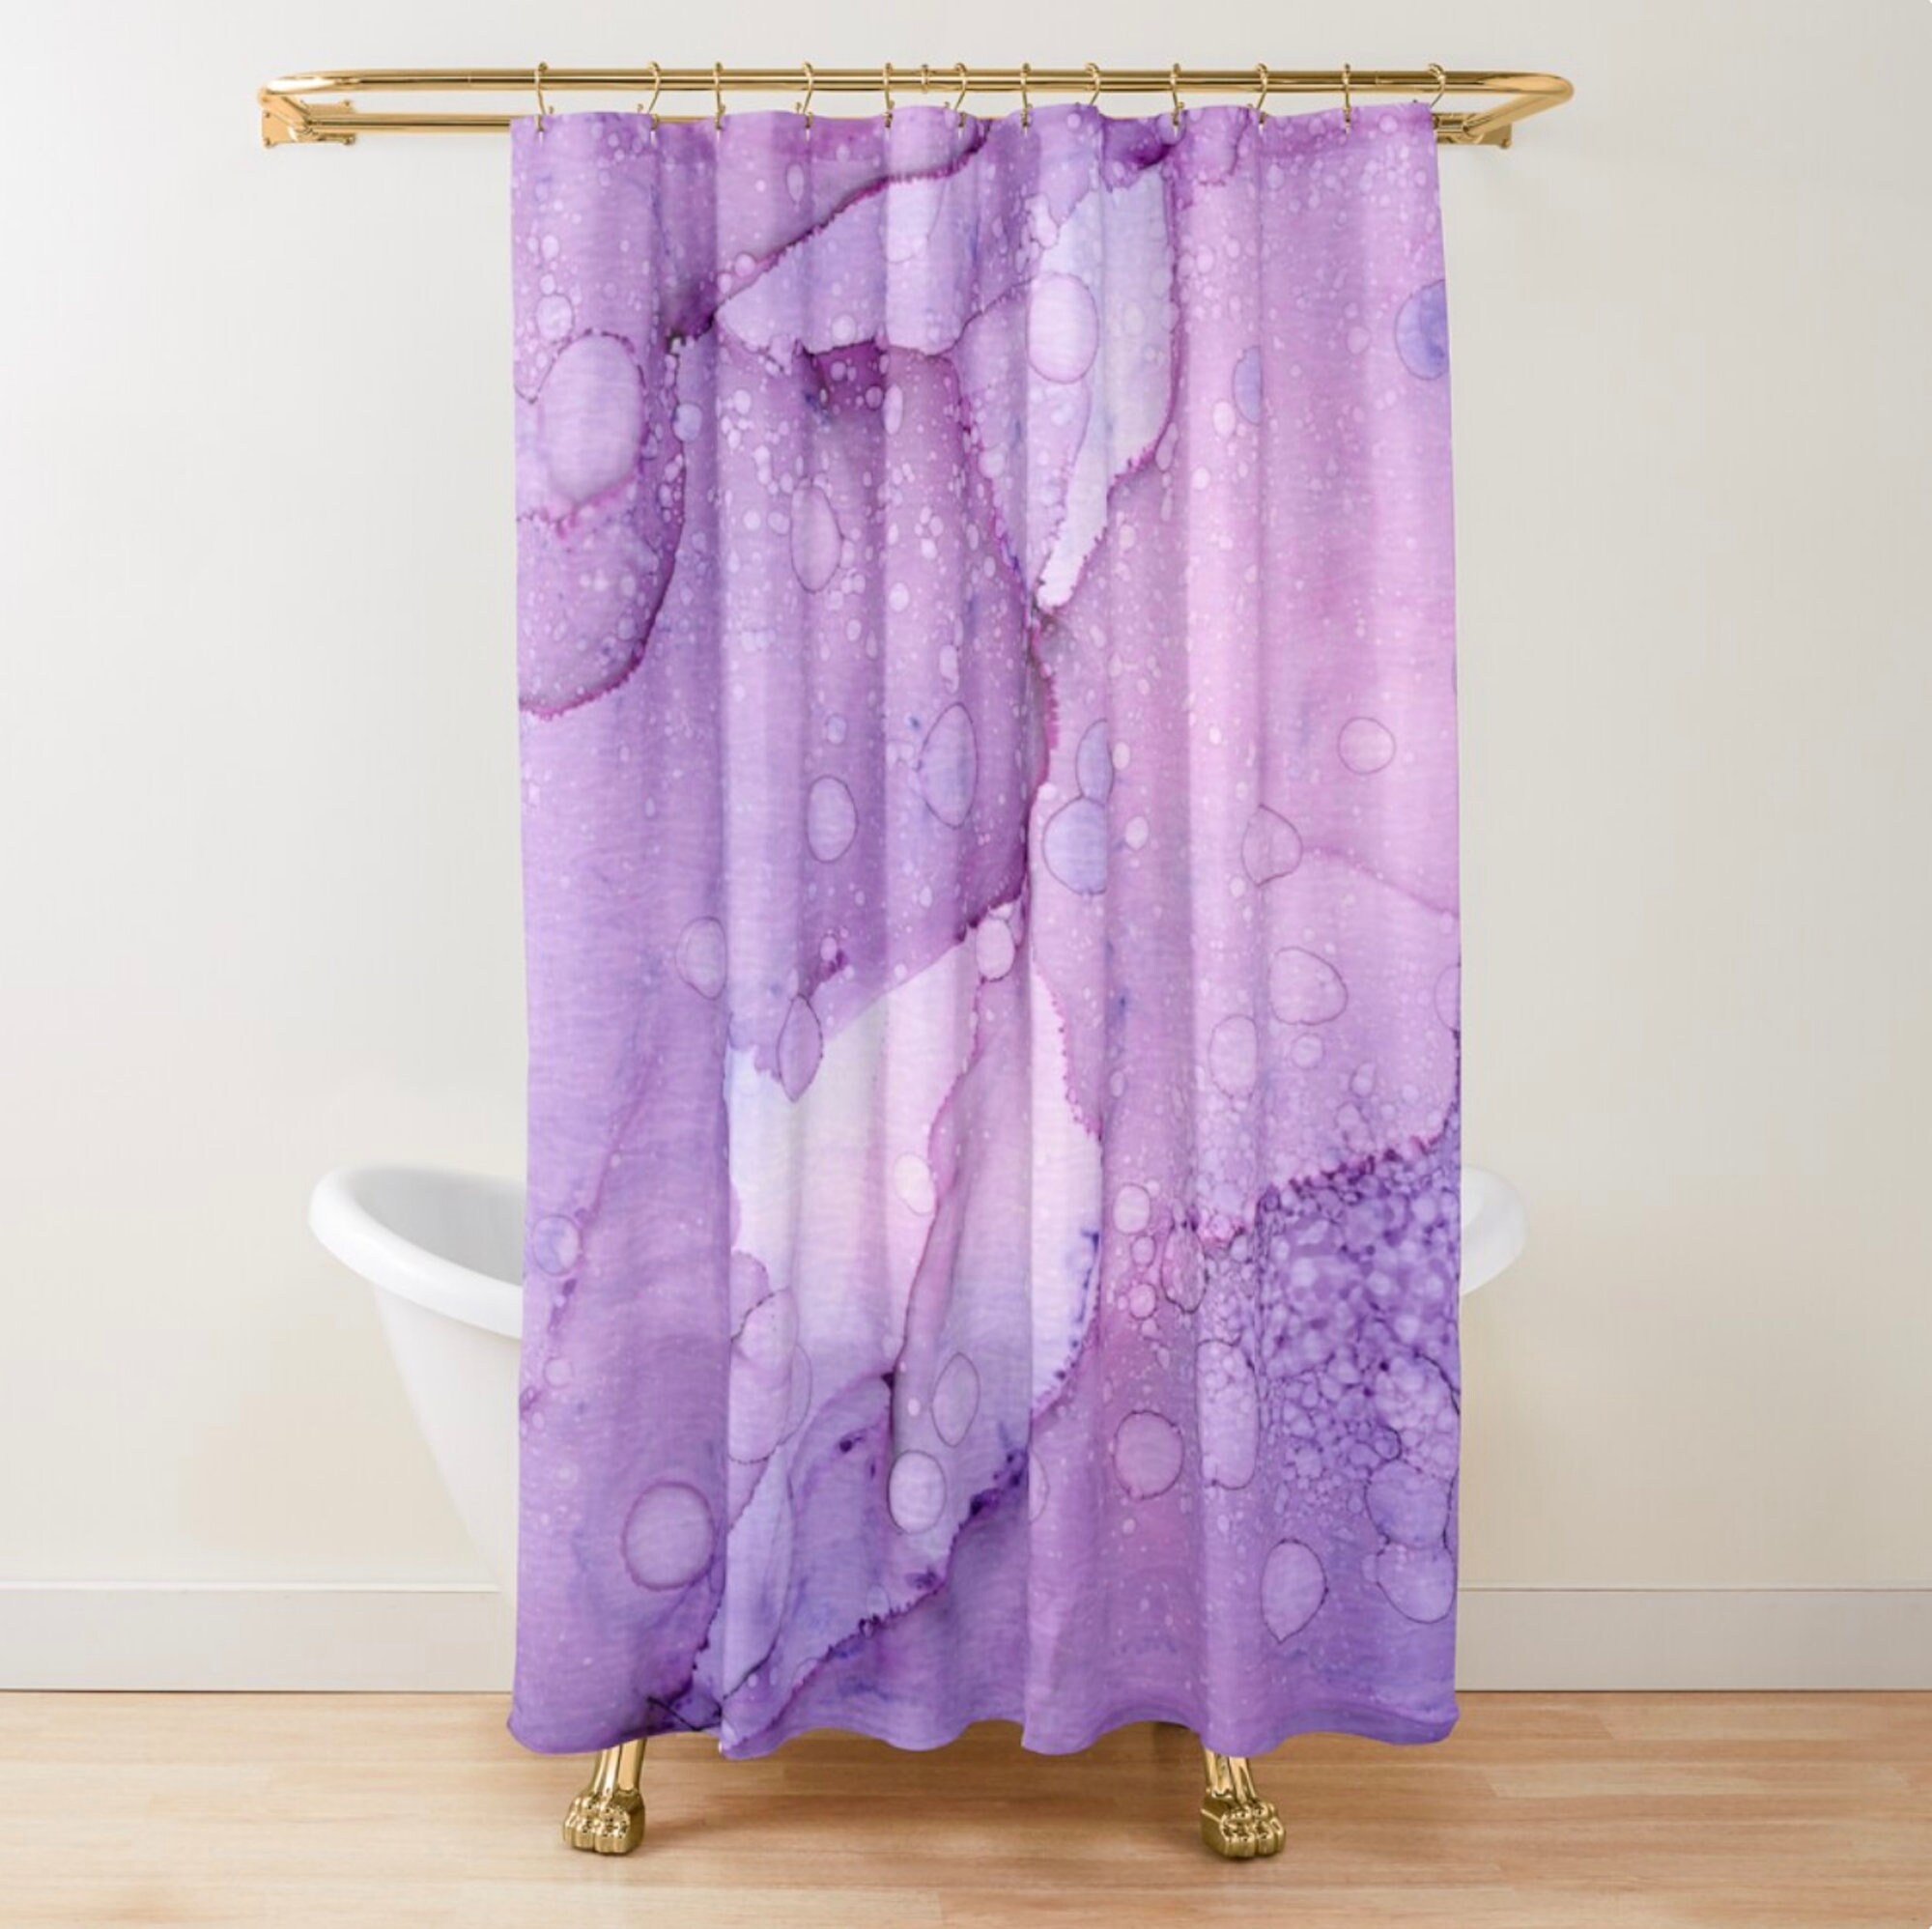 LMSM Lavender Bathroom Rugs Purple Bath Mat Rugs Mat for Bathroom Decor, Non Slip Lavender Floral Sink Mats Absorbent Quick Drying Floor Mats